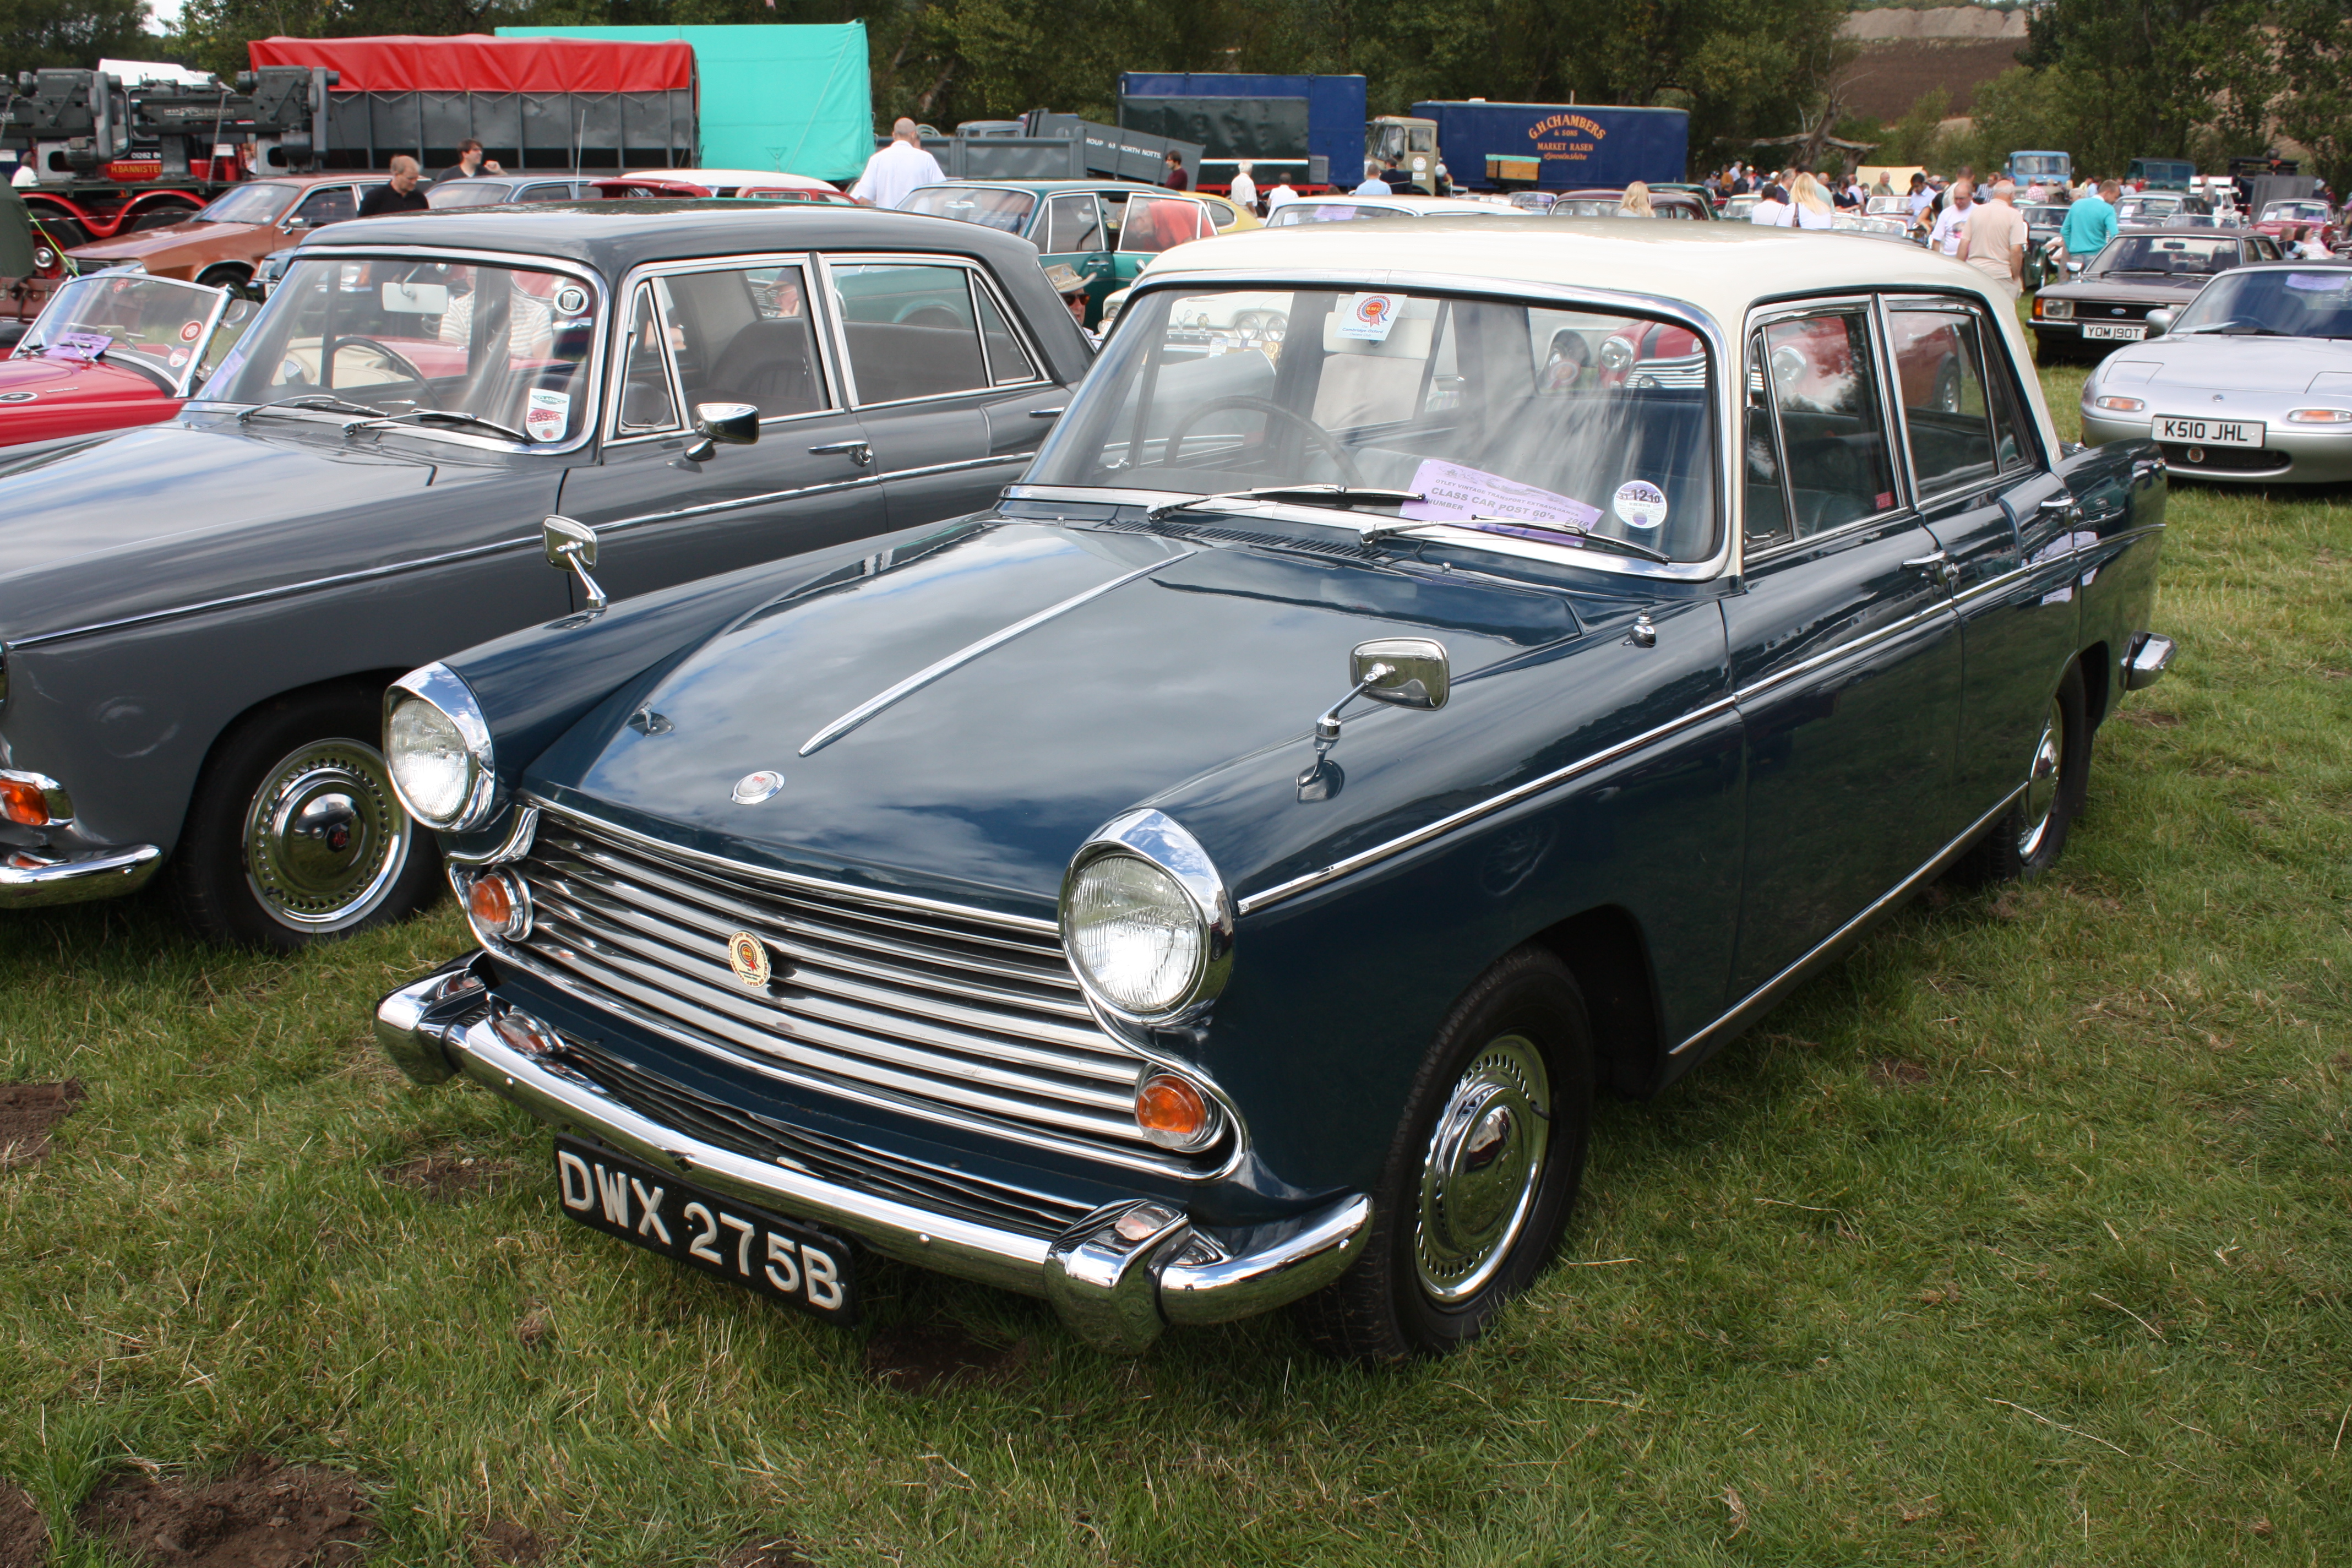 DWX 275B - 1964 Morris Oxford | Flickr - Photo Sharing!